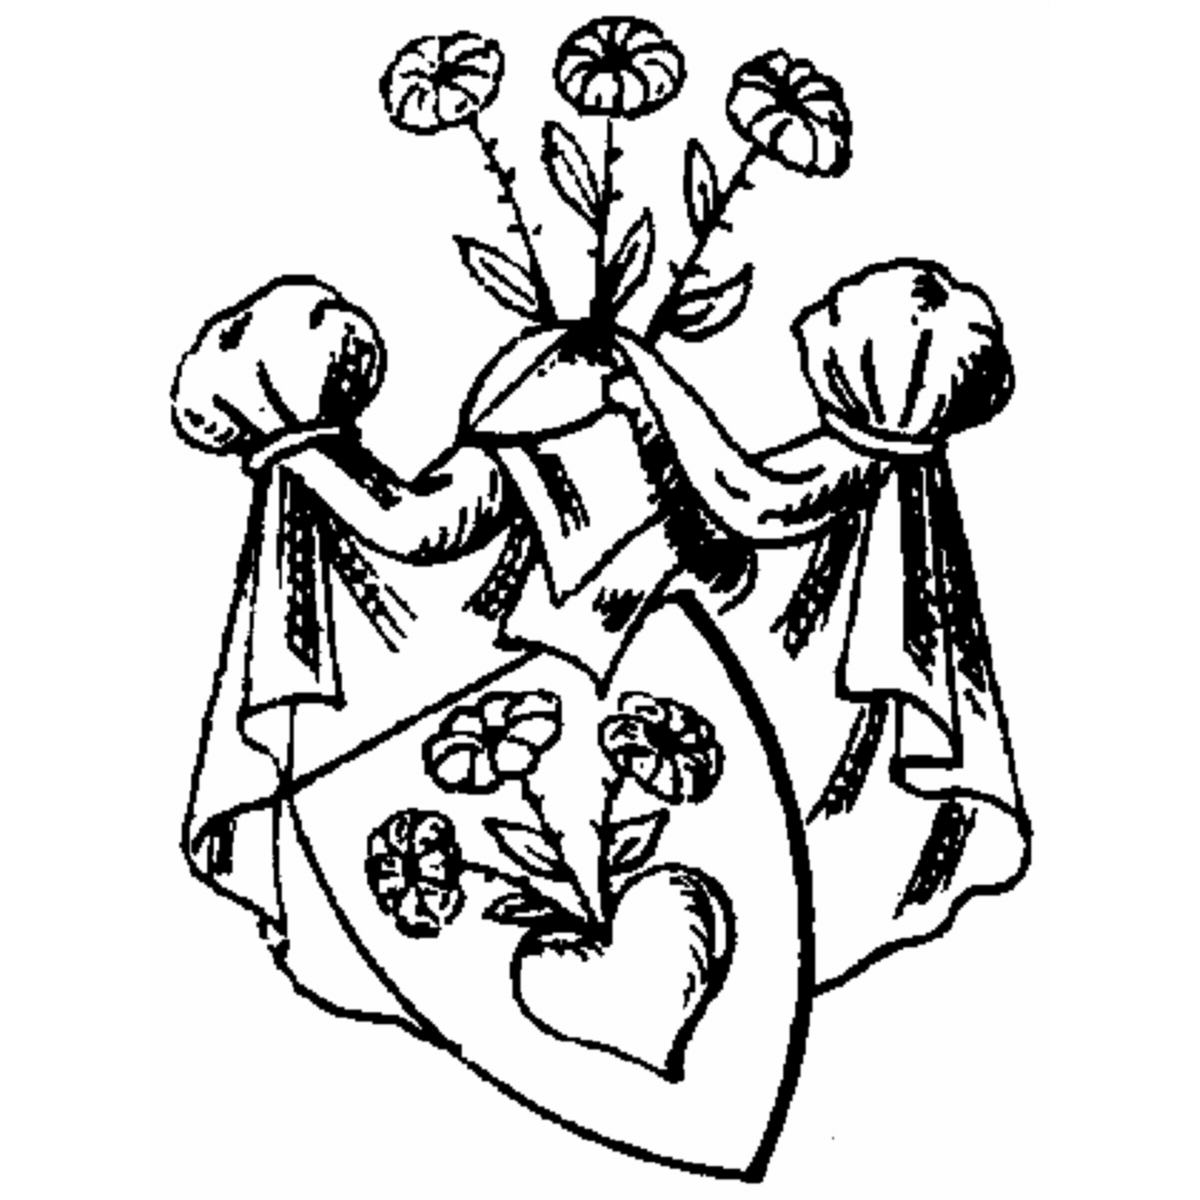 Wappen der Familie Graziadei